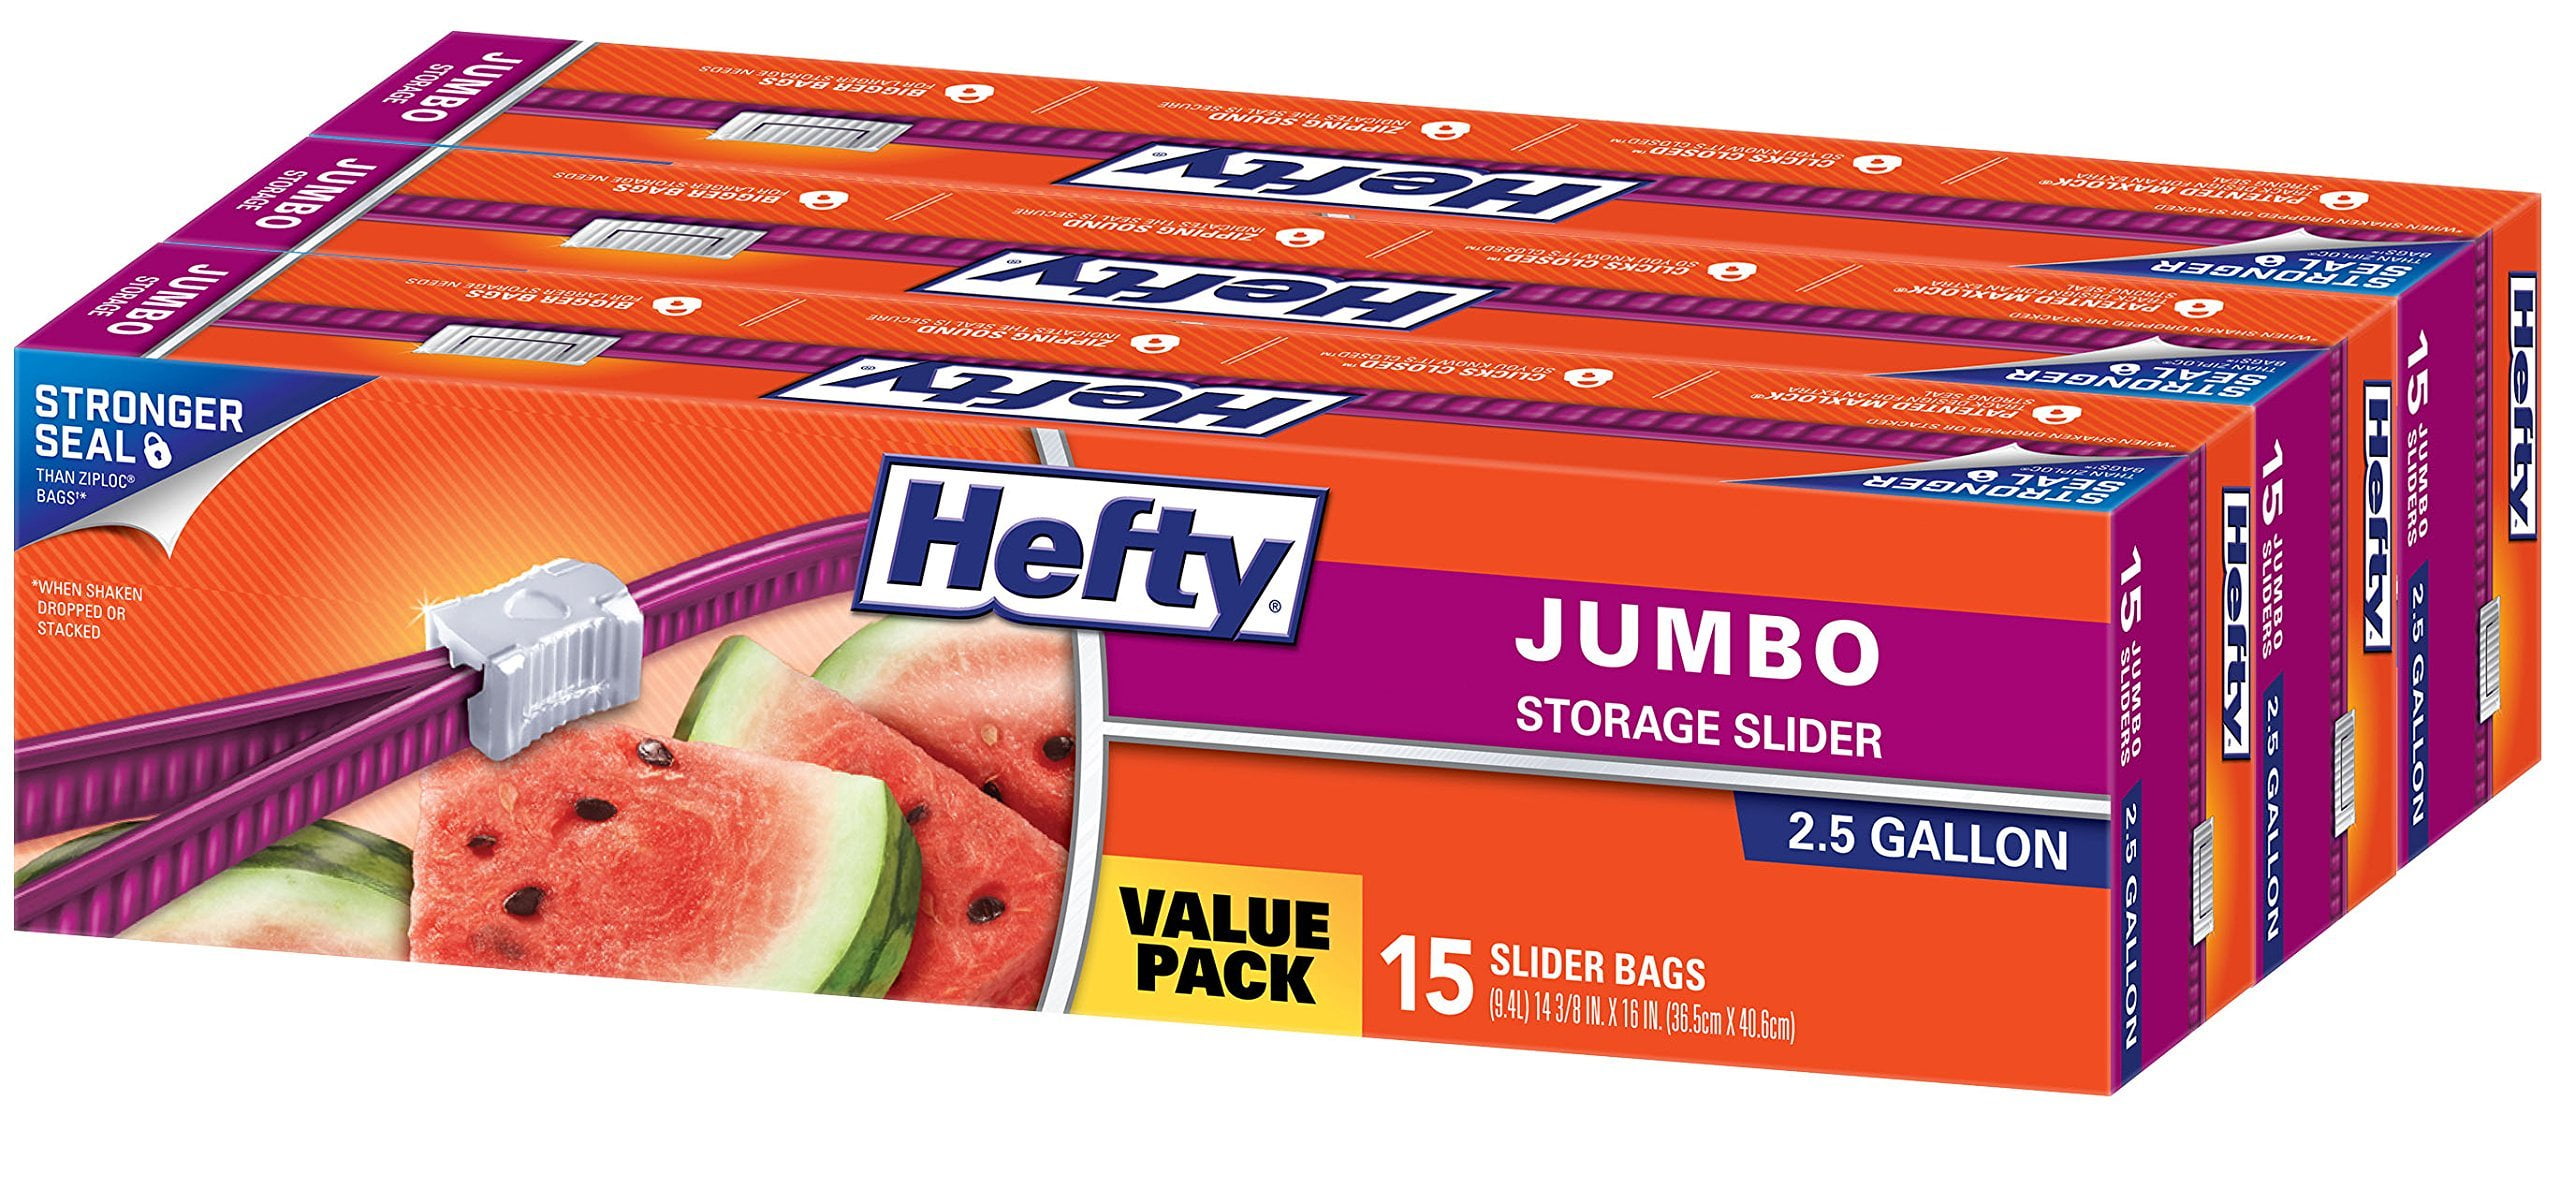 Hefty jumbo 2.5gallon 12 storage slider bags